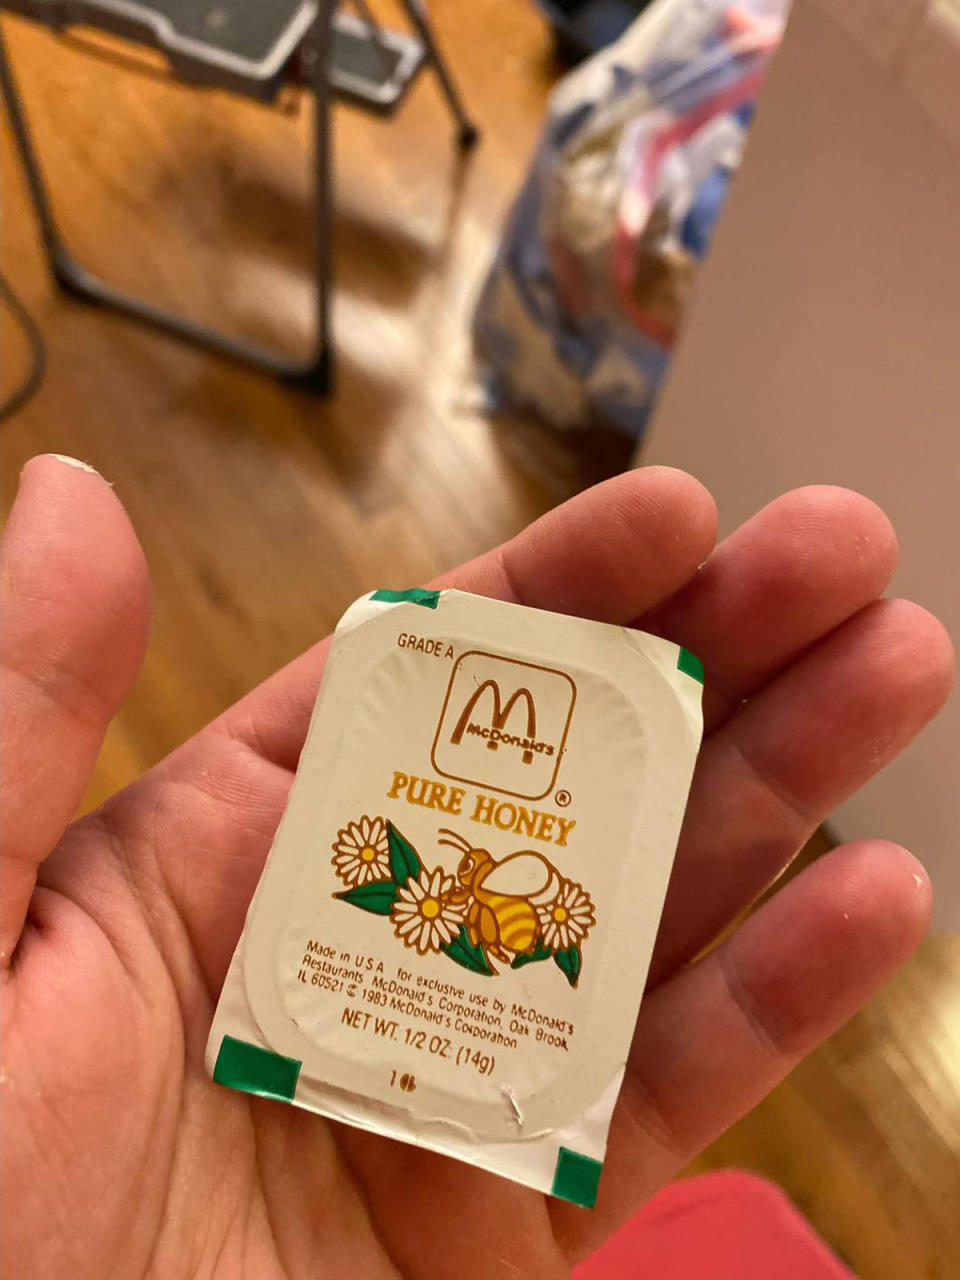 A packet of McDonald's honey